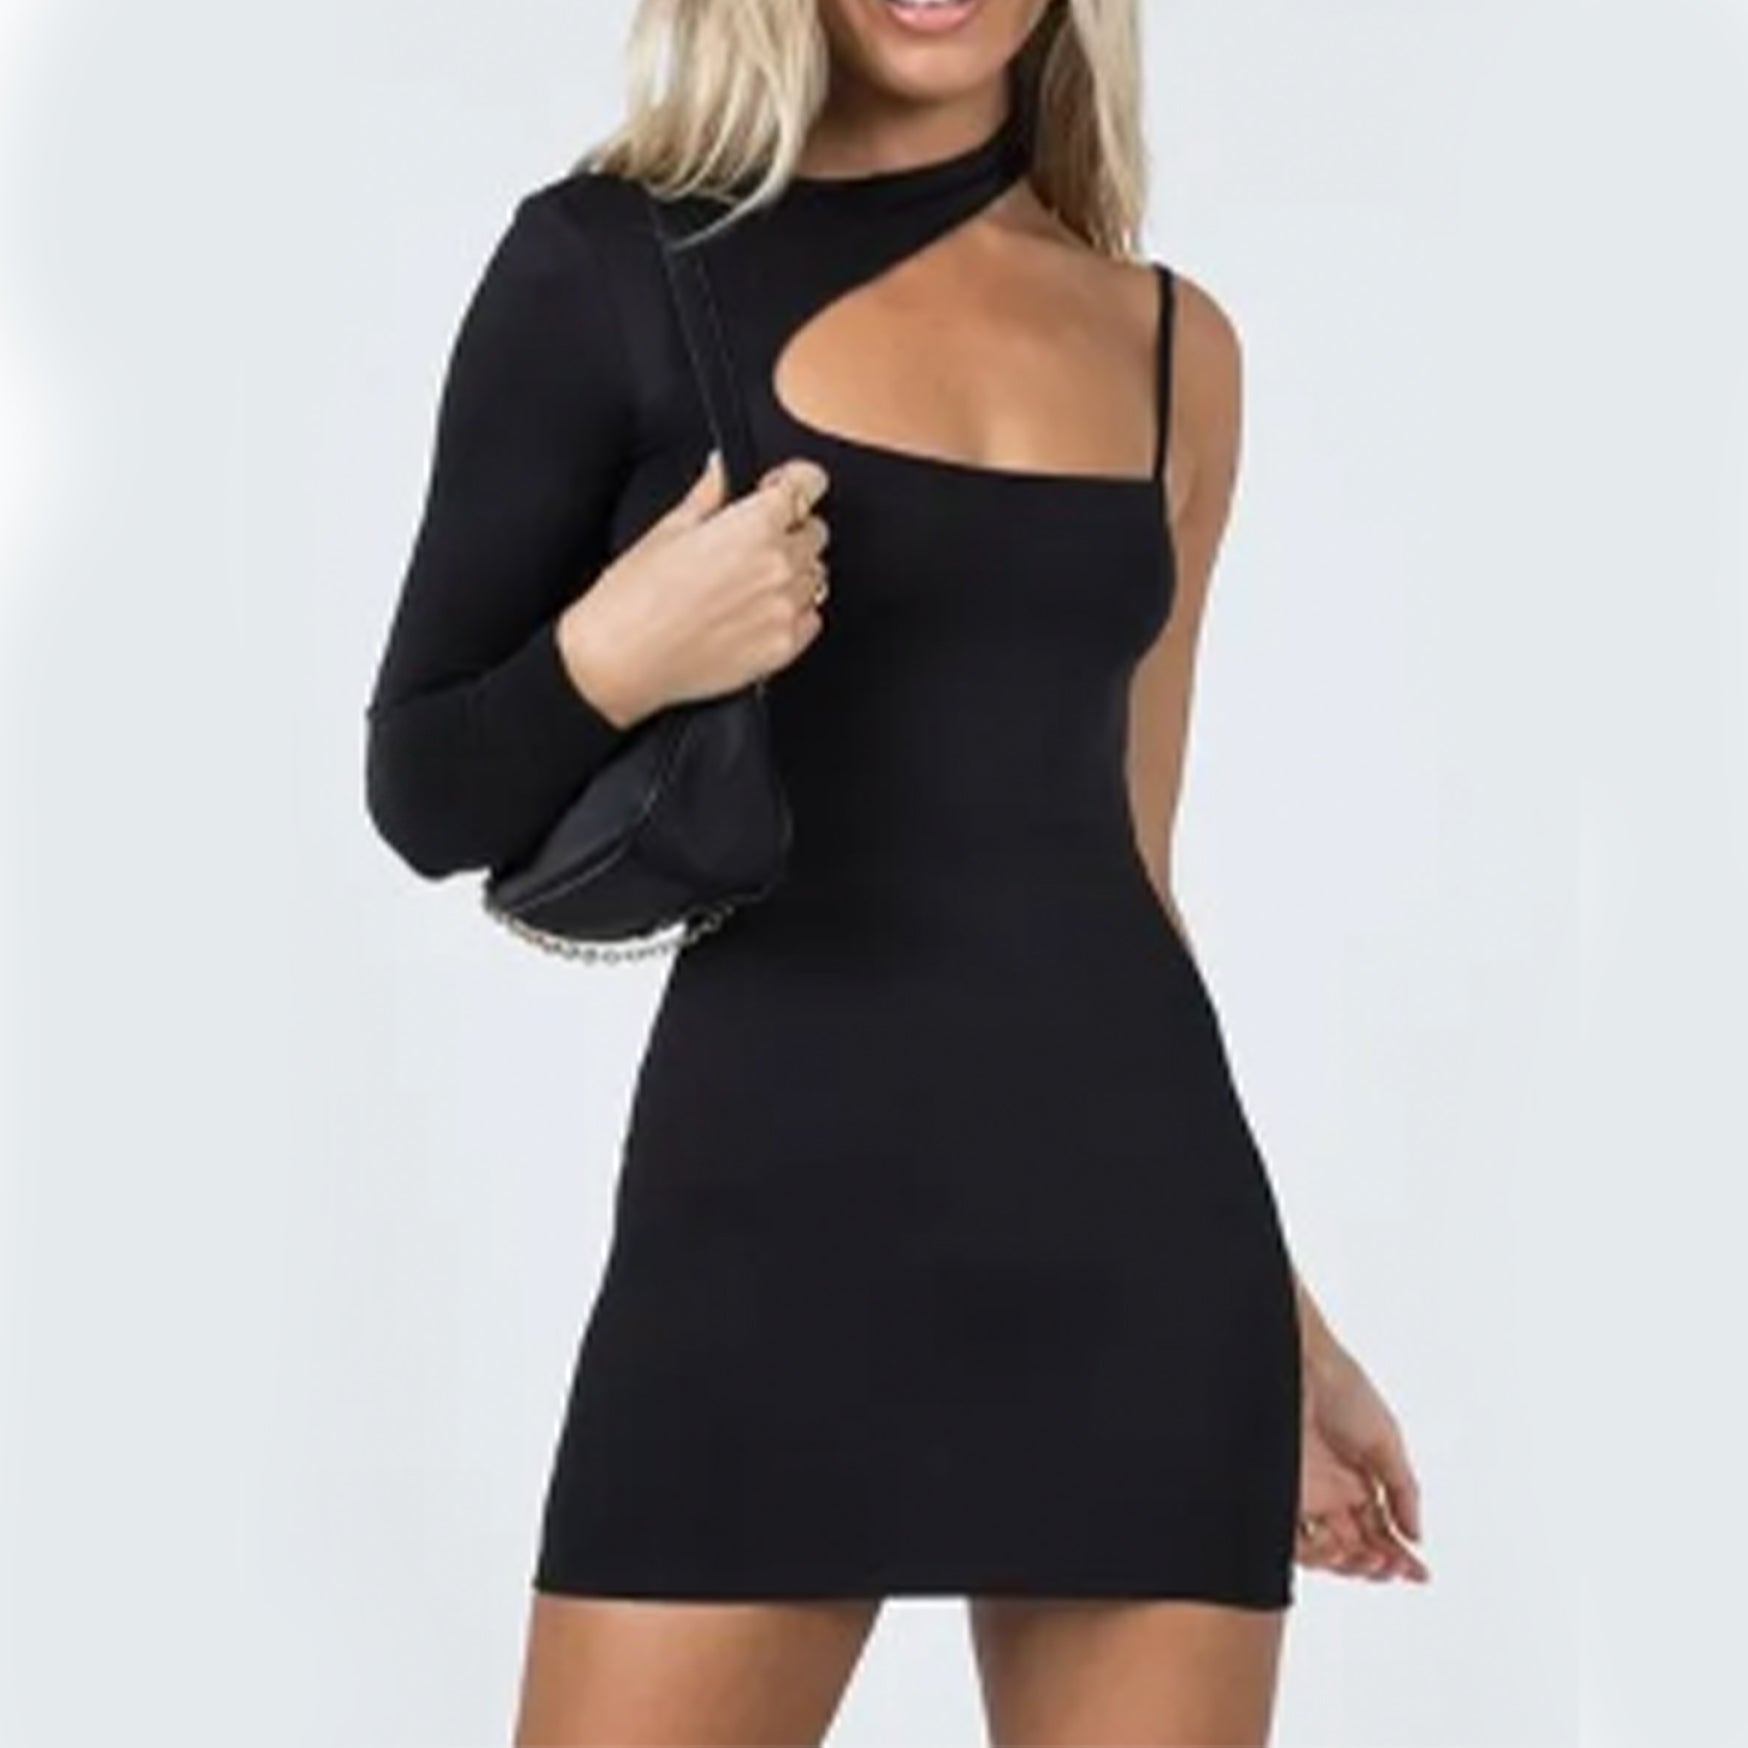 Simplicity Bodycon Dress - Black S